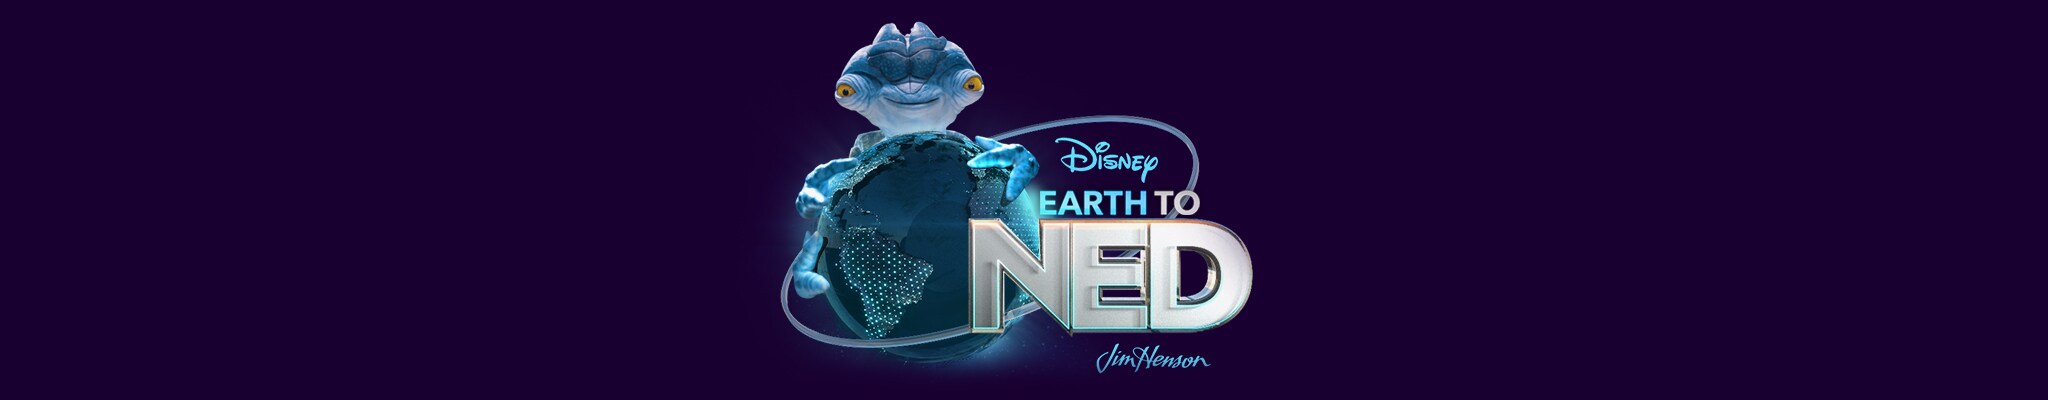 Disney | Earth to Ned | Jim Henson